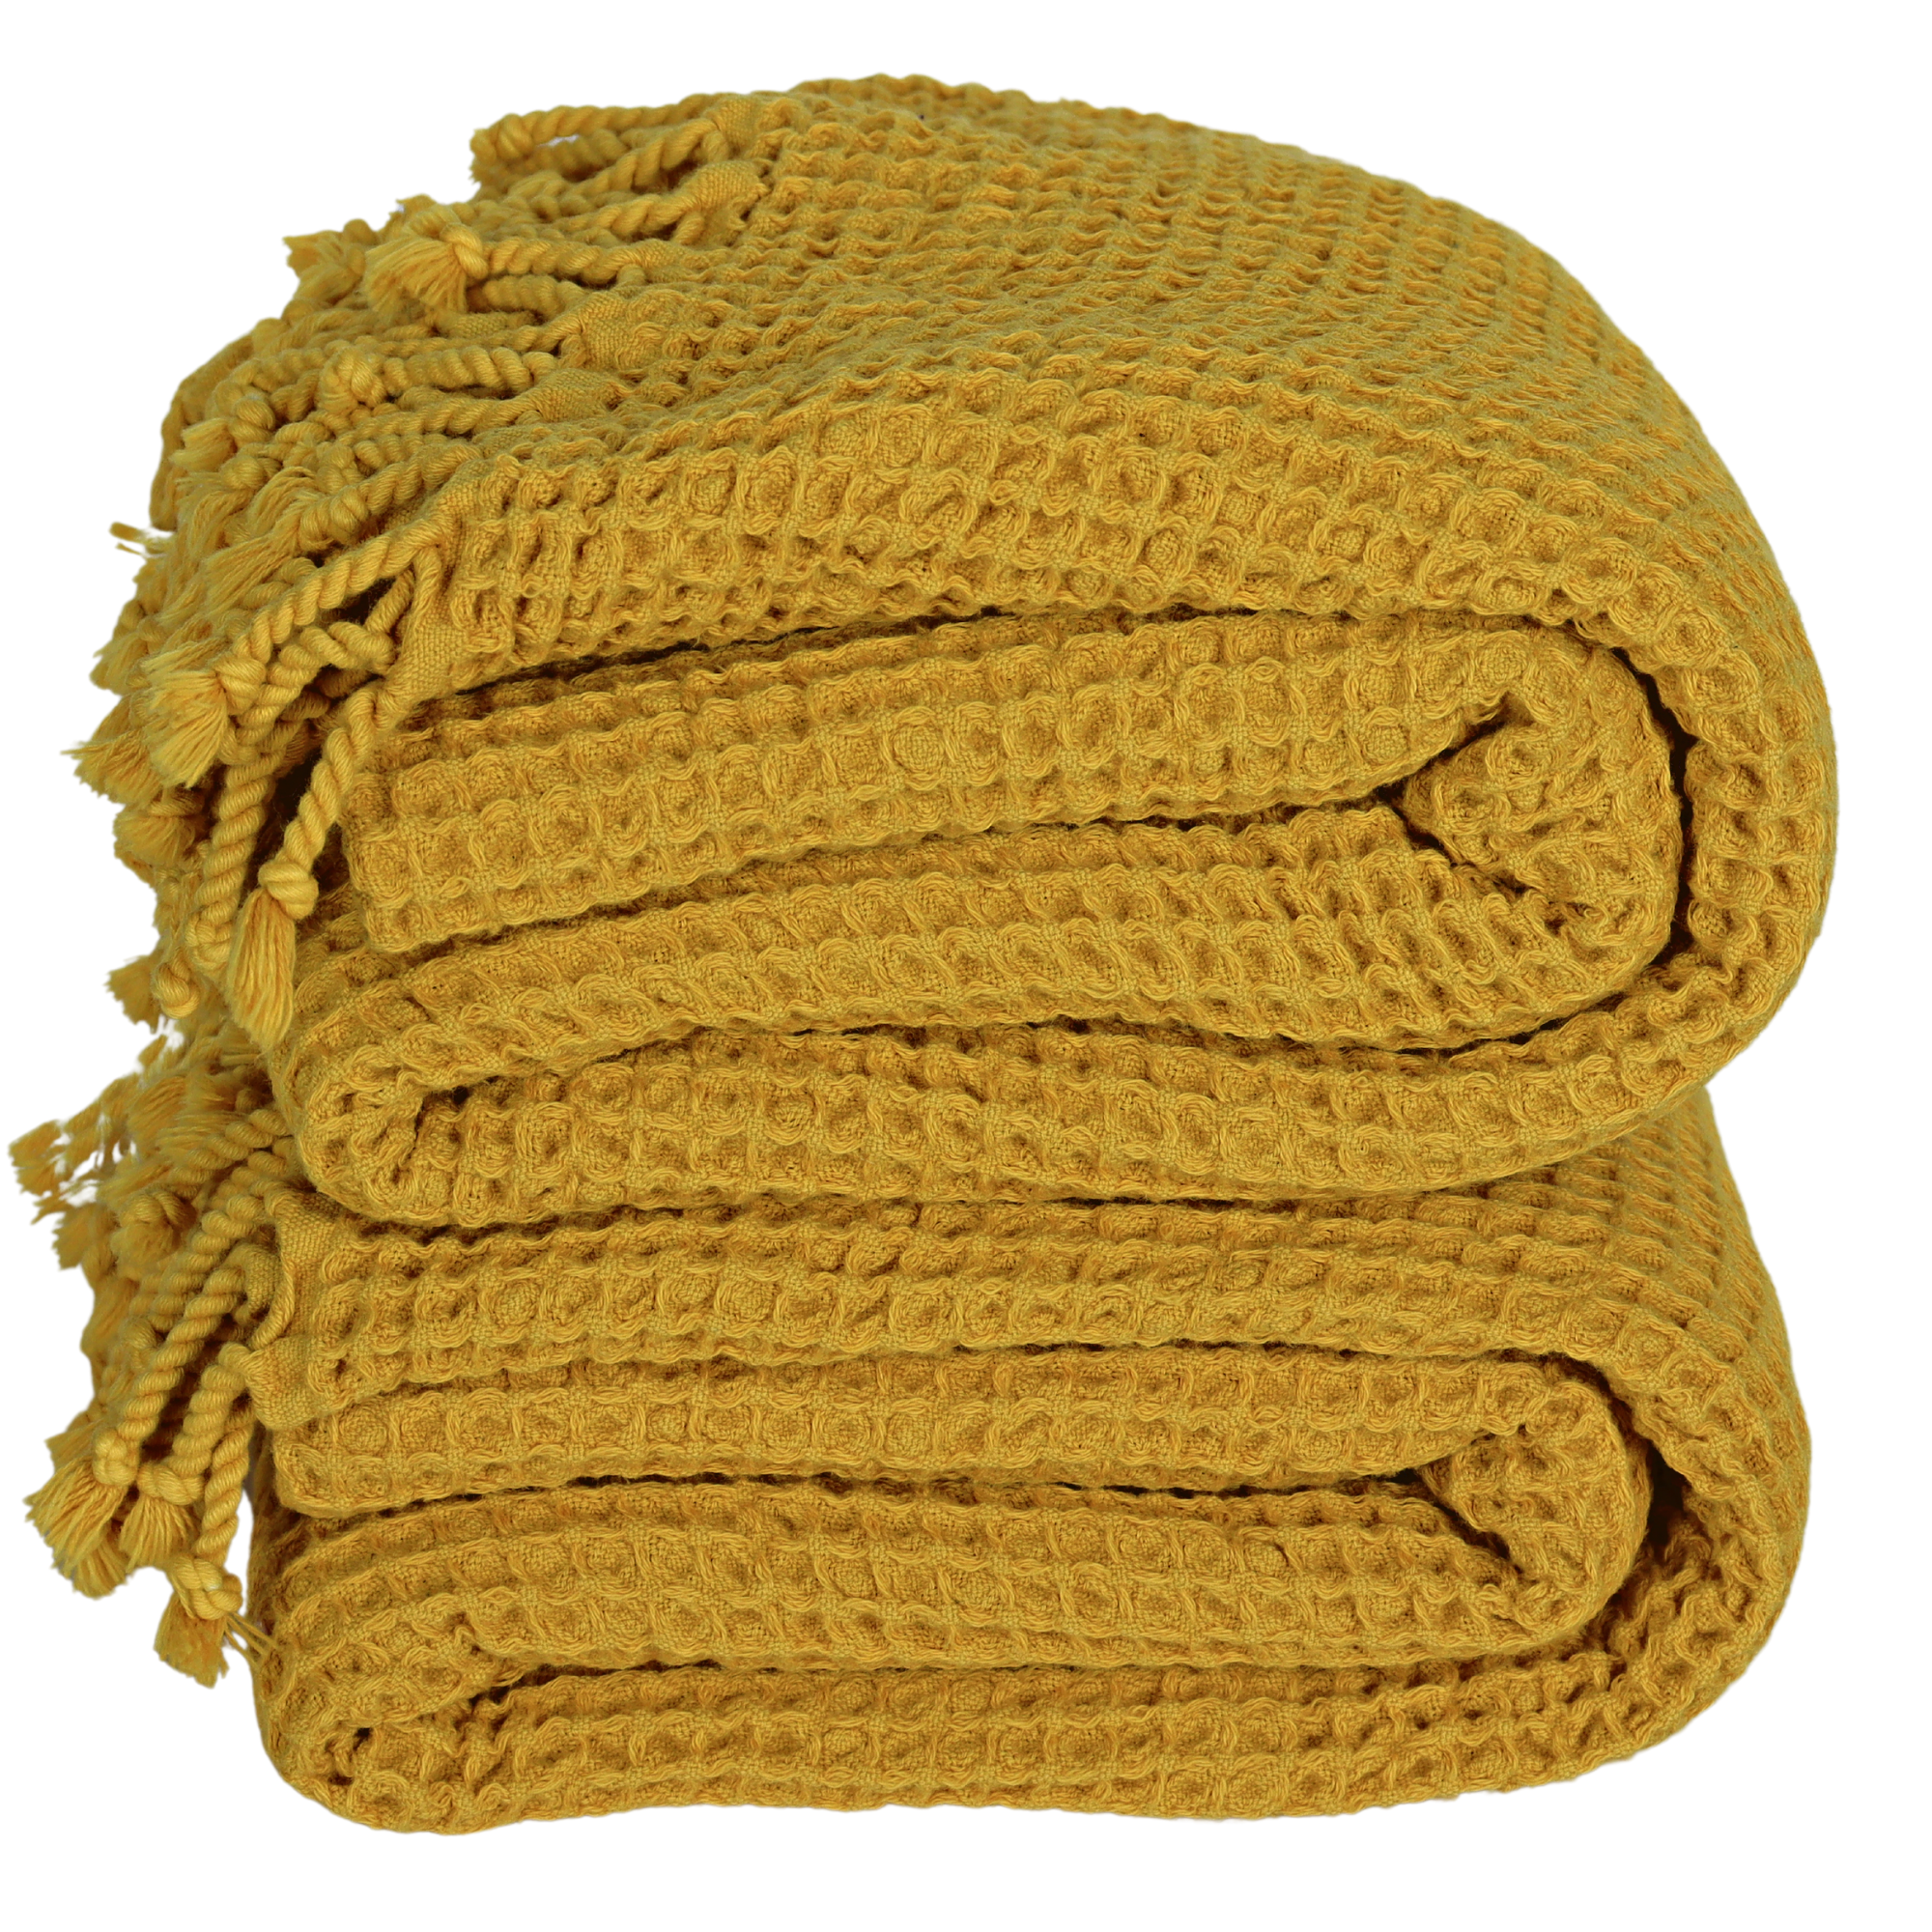 Waffle Beach Towel, Turkish Cotton Waffle Weave Towel, Turkish Waffle Towel, Waffle Textured Towel, Handmade, with Tassel, Soft, Thin, Quick Dry Beach Towel (Mustard Yellow)